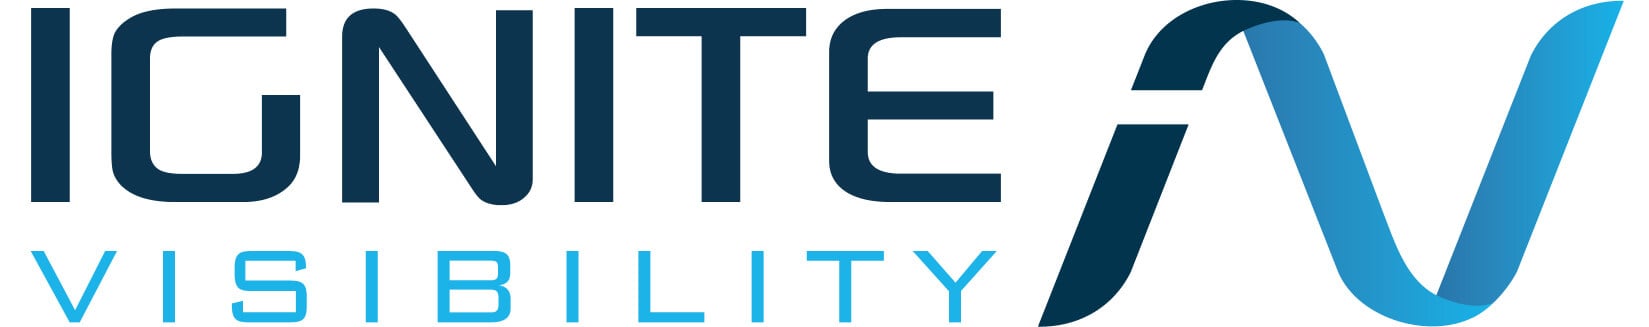 Best SD SEO Company Logo: Ignite Visibility